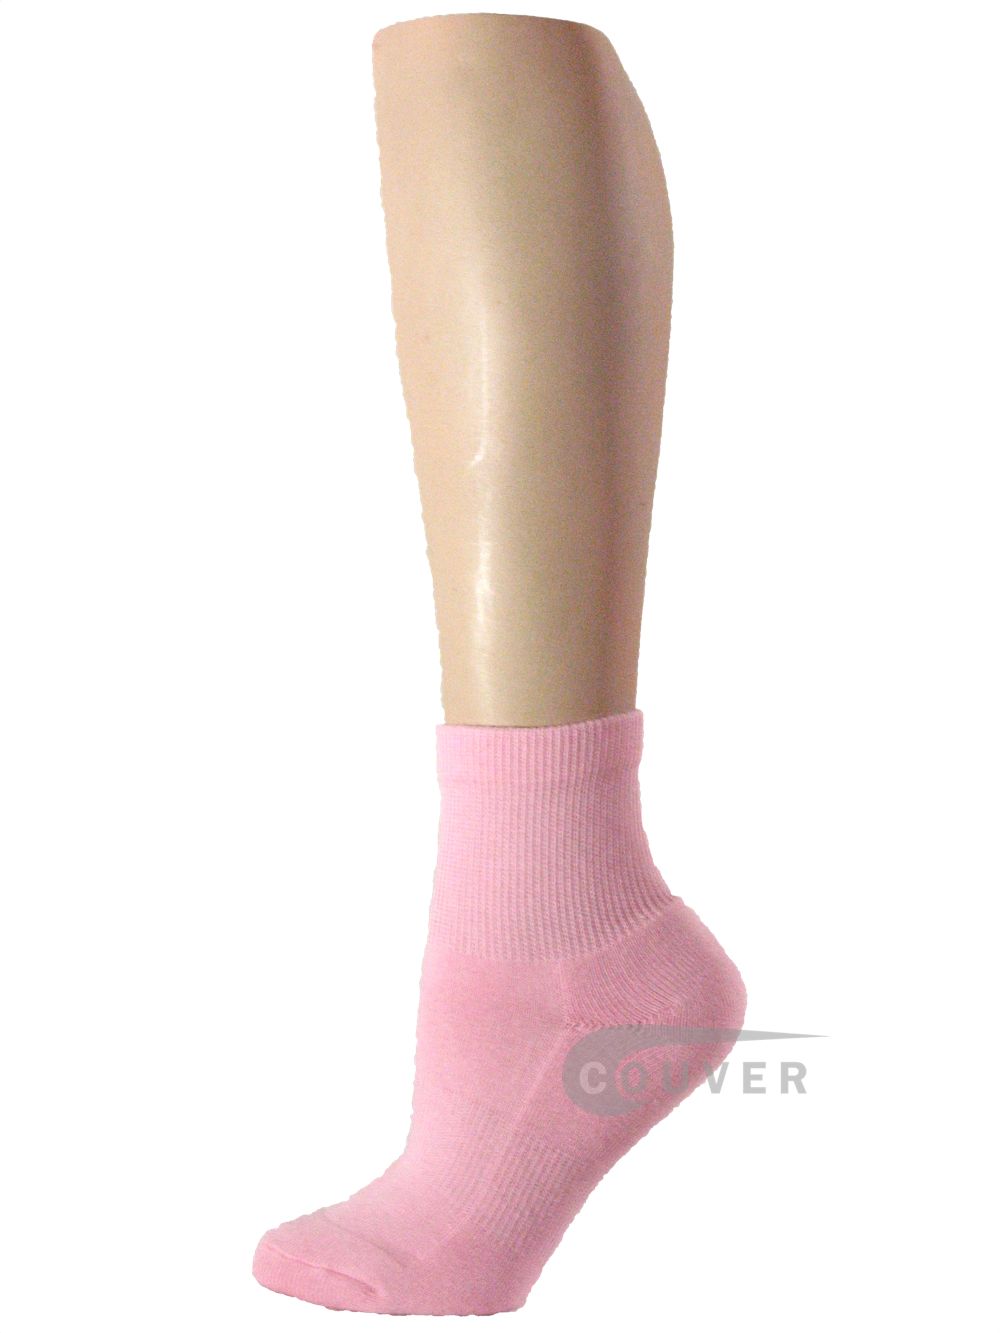 Youth Hot Pink Sports (Football Soccer Softball Baseball) Knee Socks COUVER